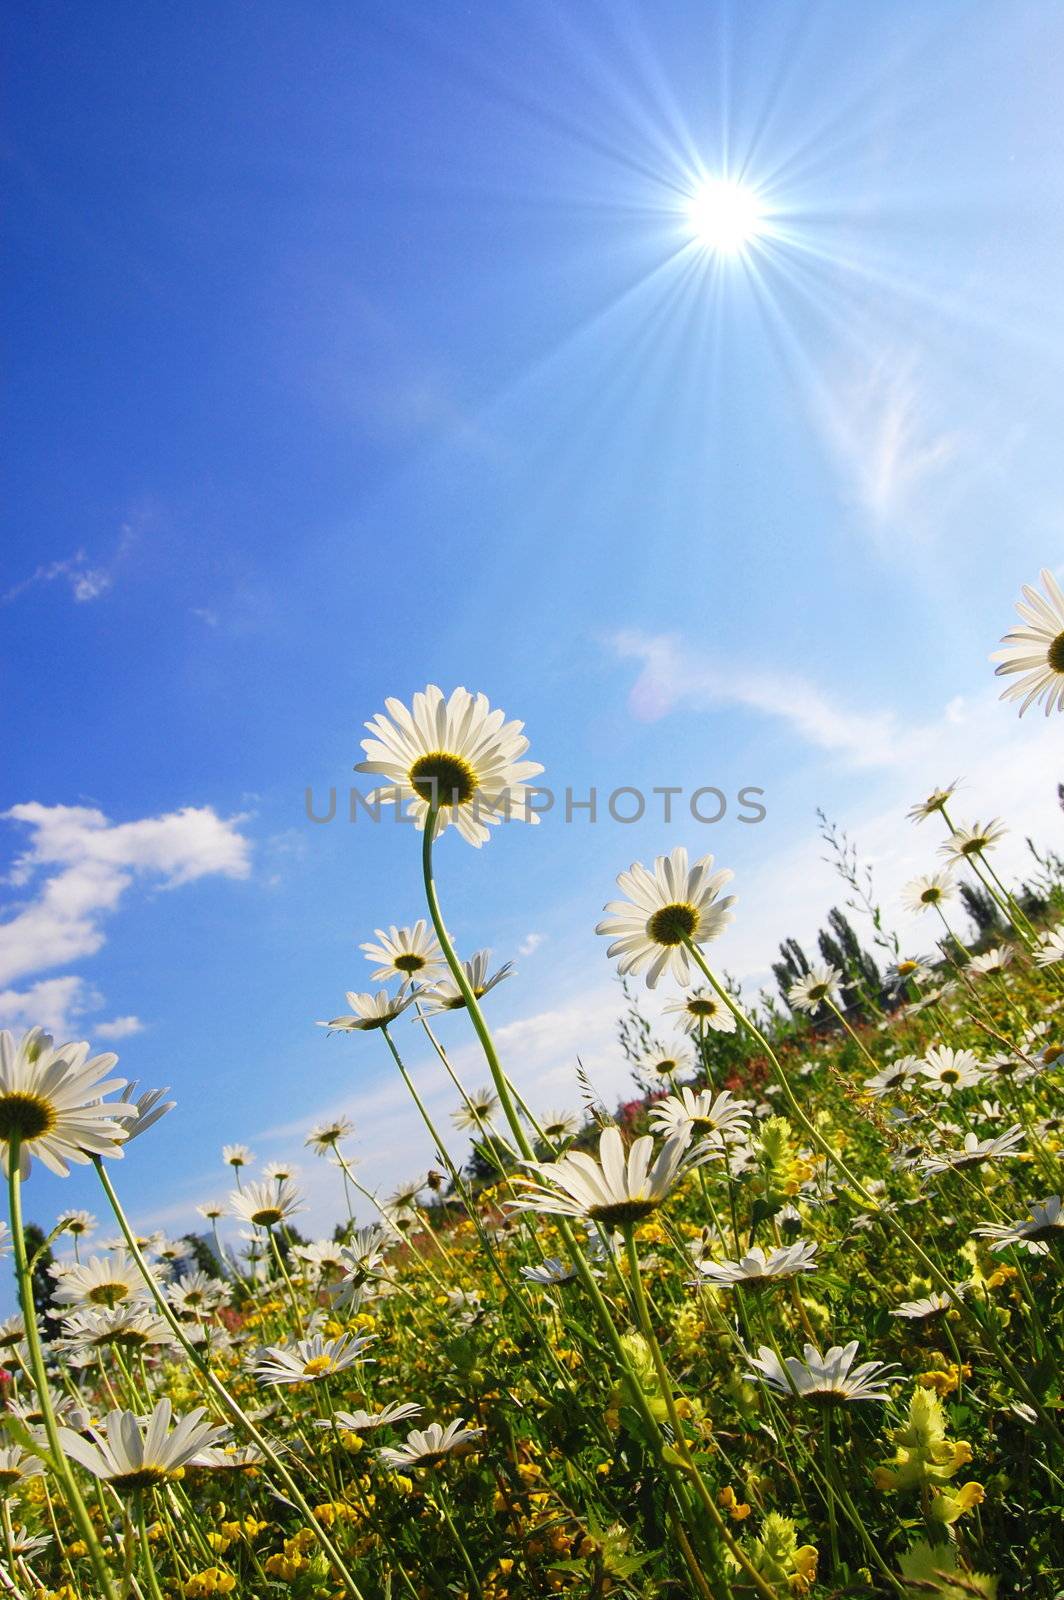 flower in summer under blue sky with copyspace